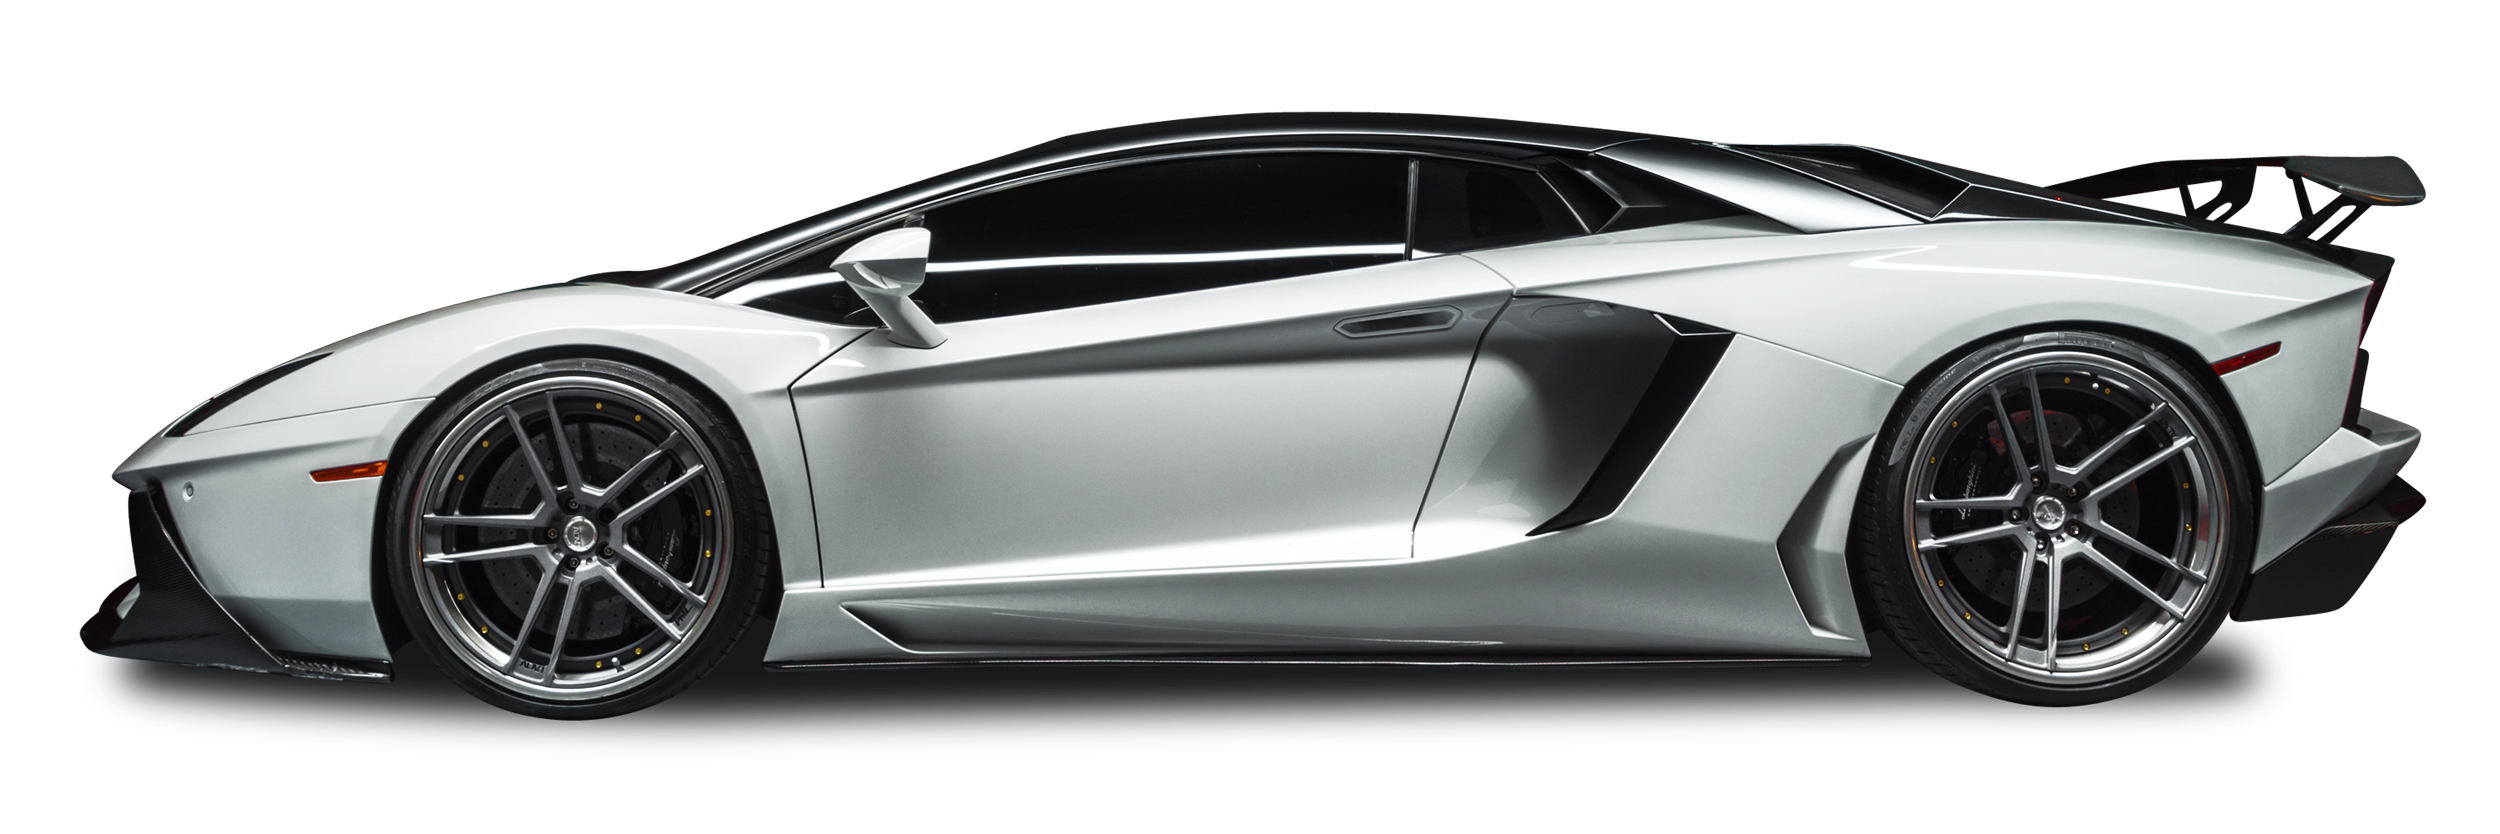 Lamborghini Aventador Convertible PNG imagen transparente